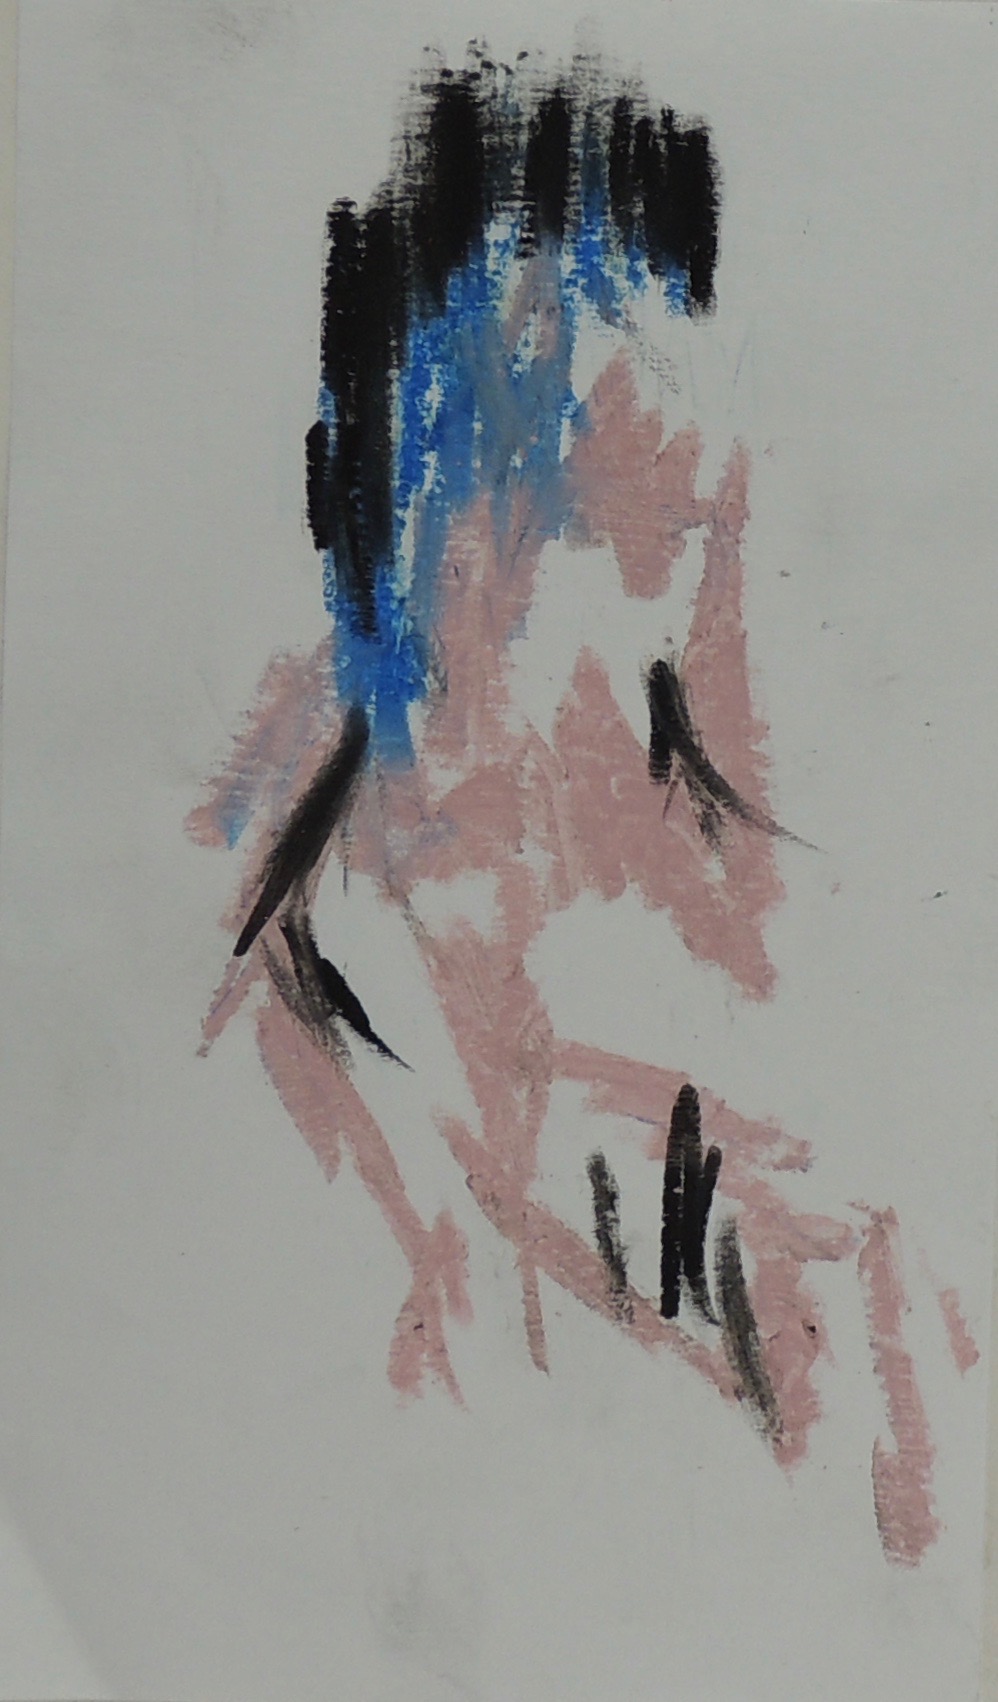   Untitled    Chalk pastel on paper    5” x 8.5”    2017  